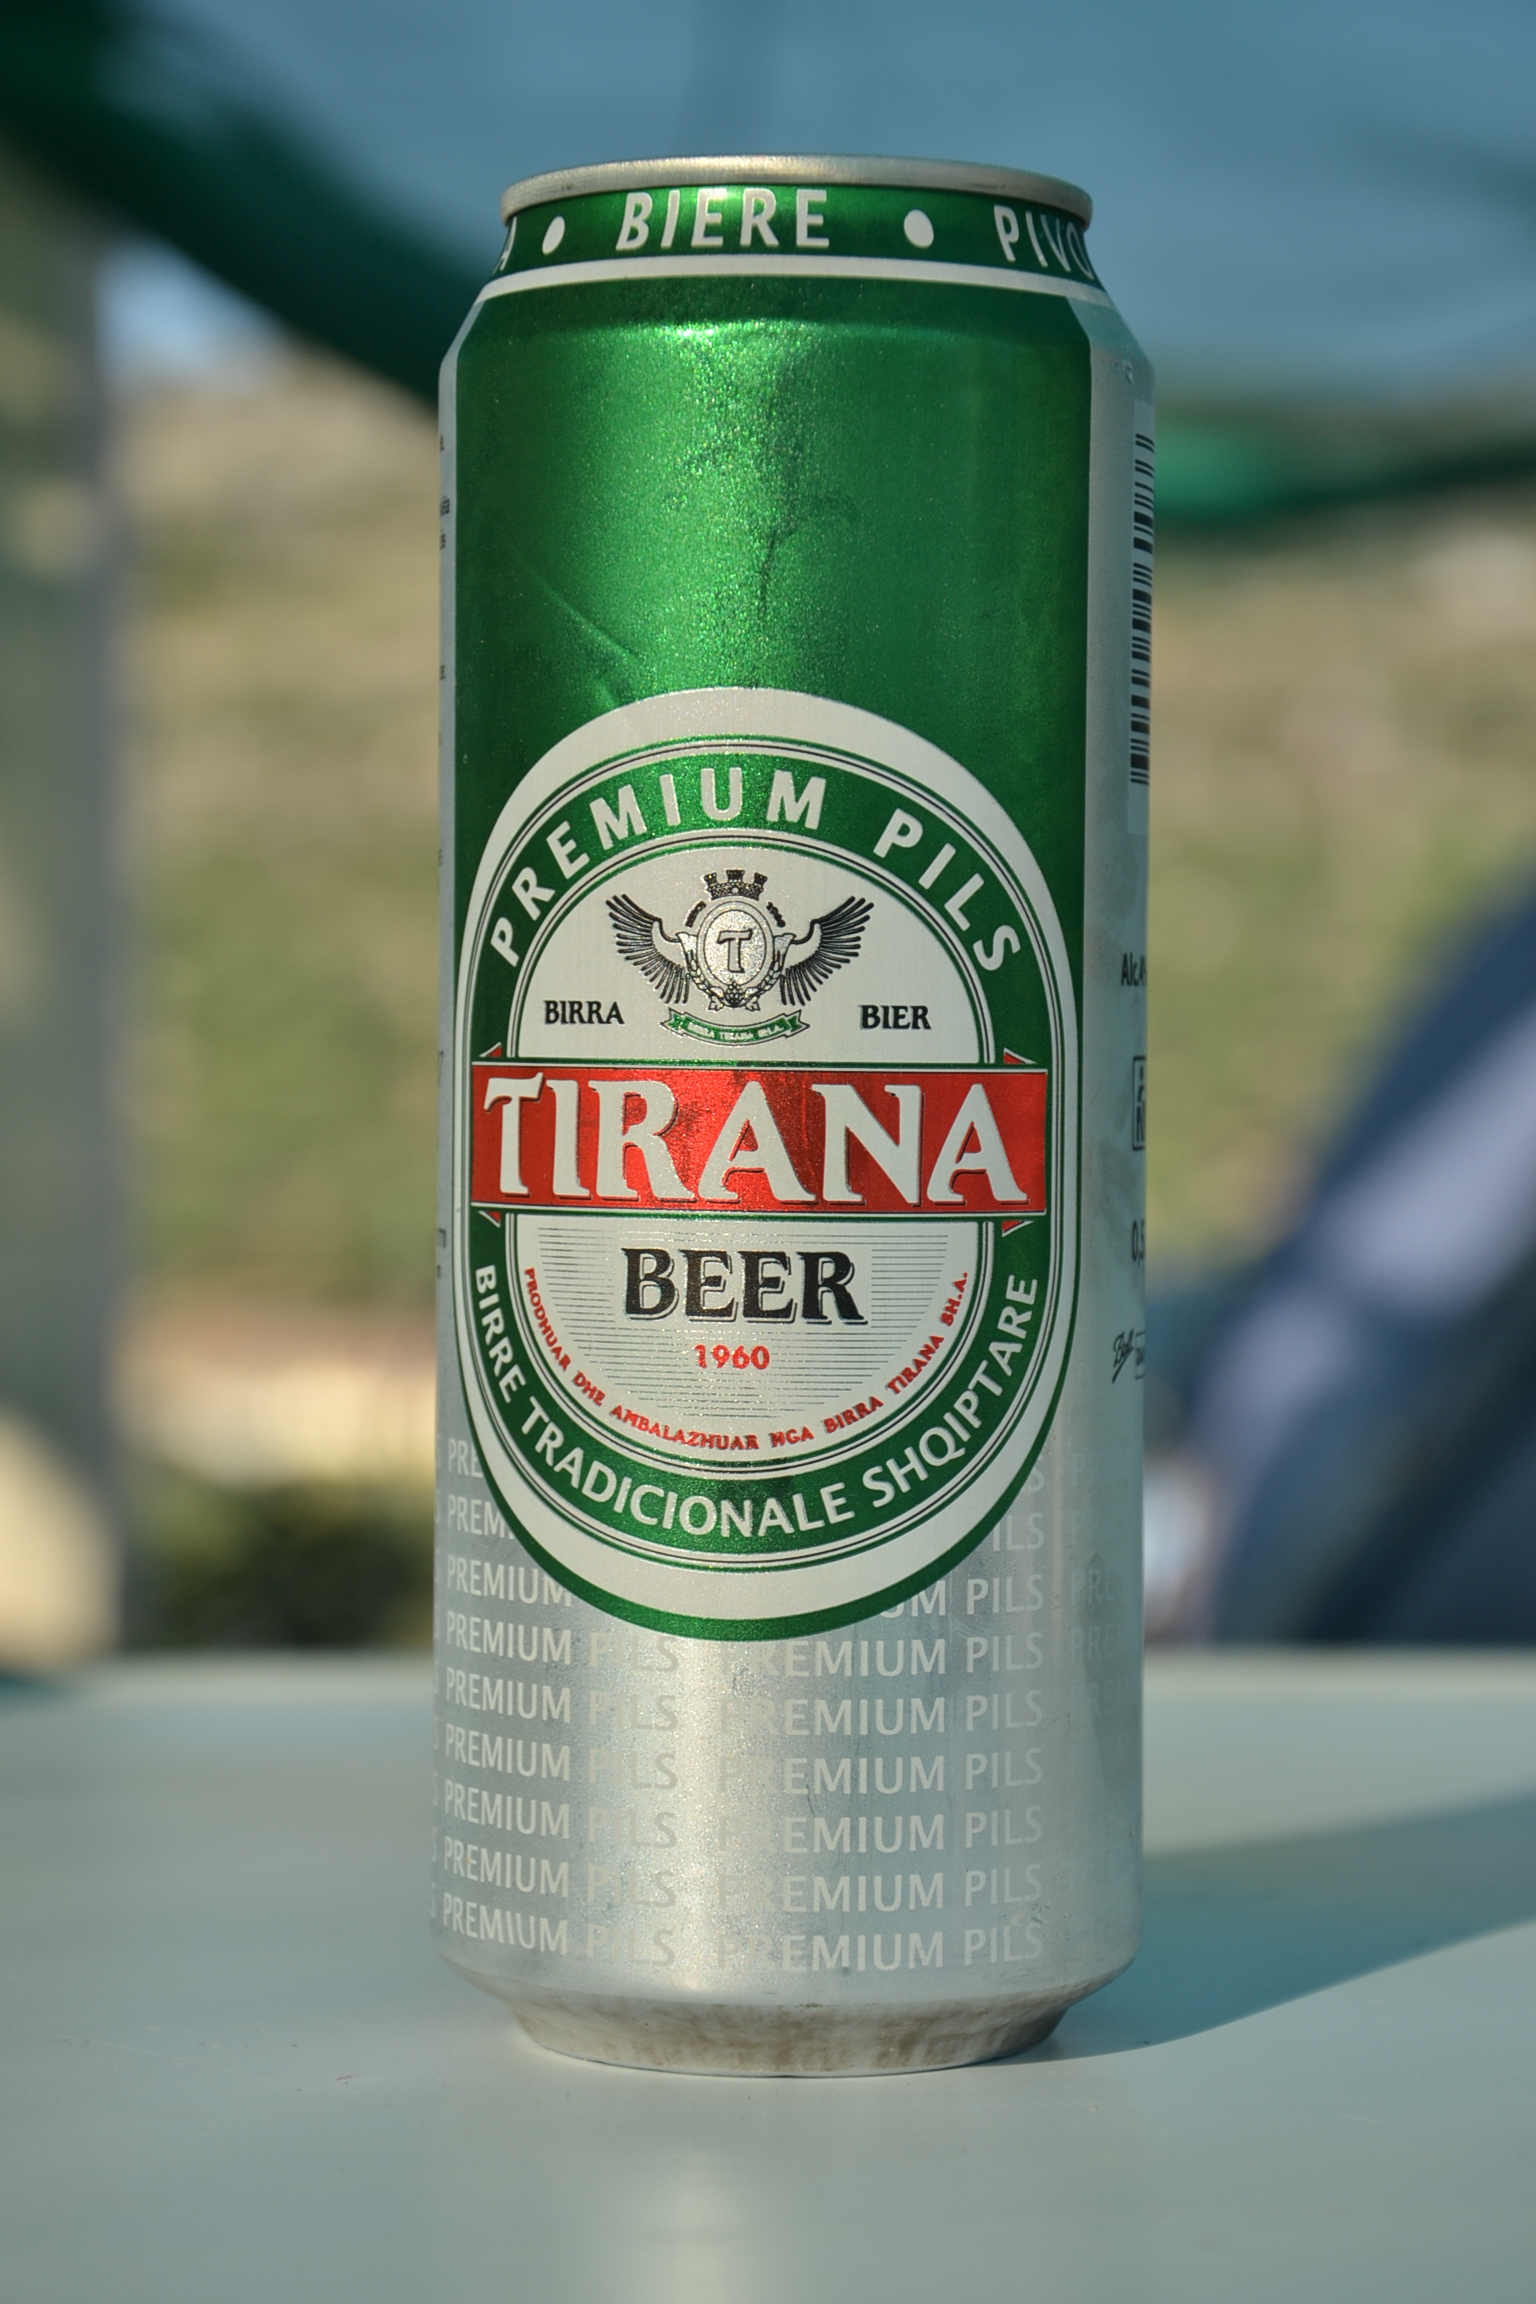 Coaster or mat of Tirana Kuqalashe Beer Birra from Albania. 